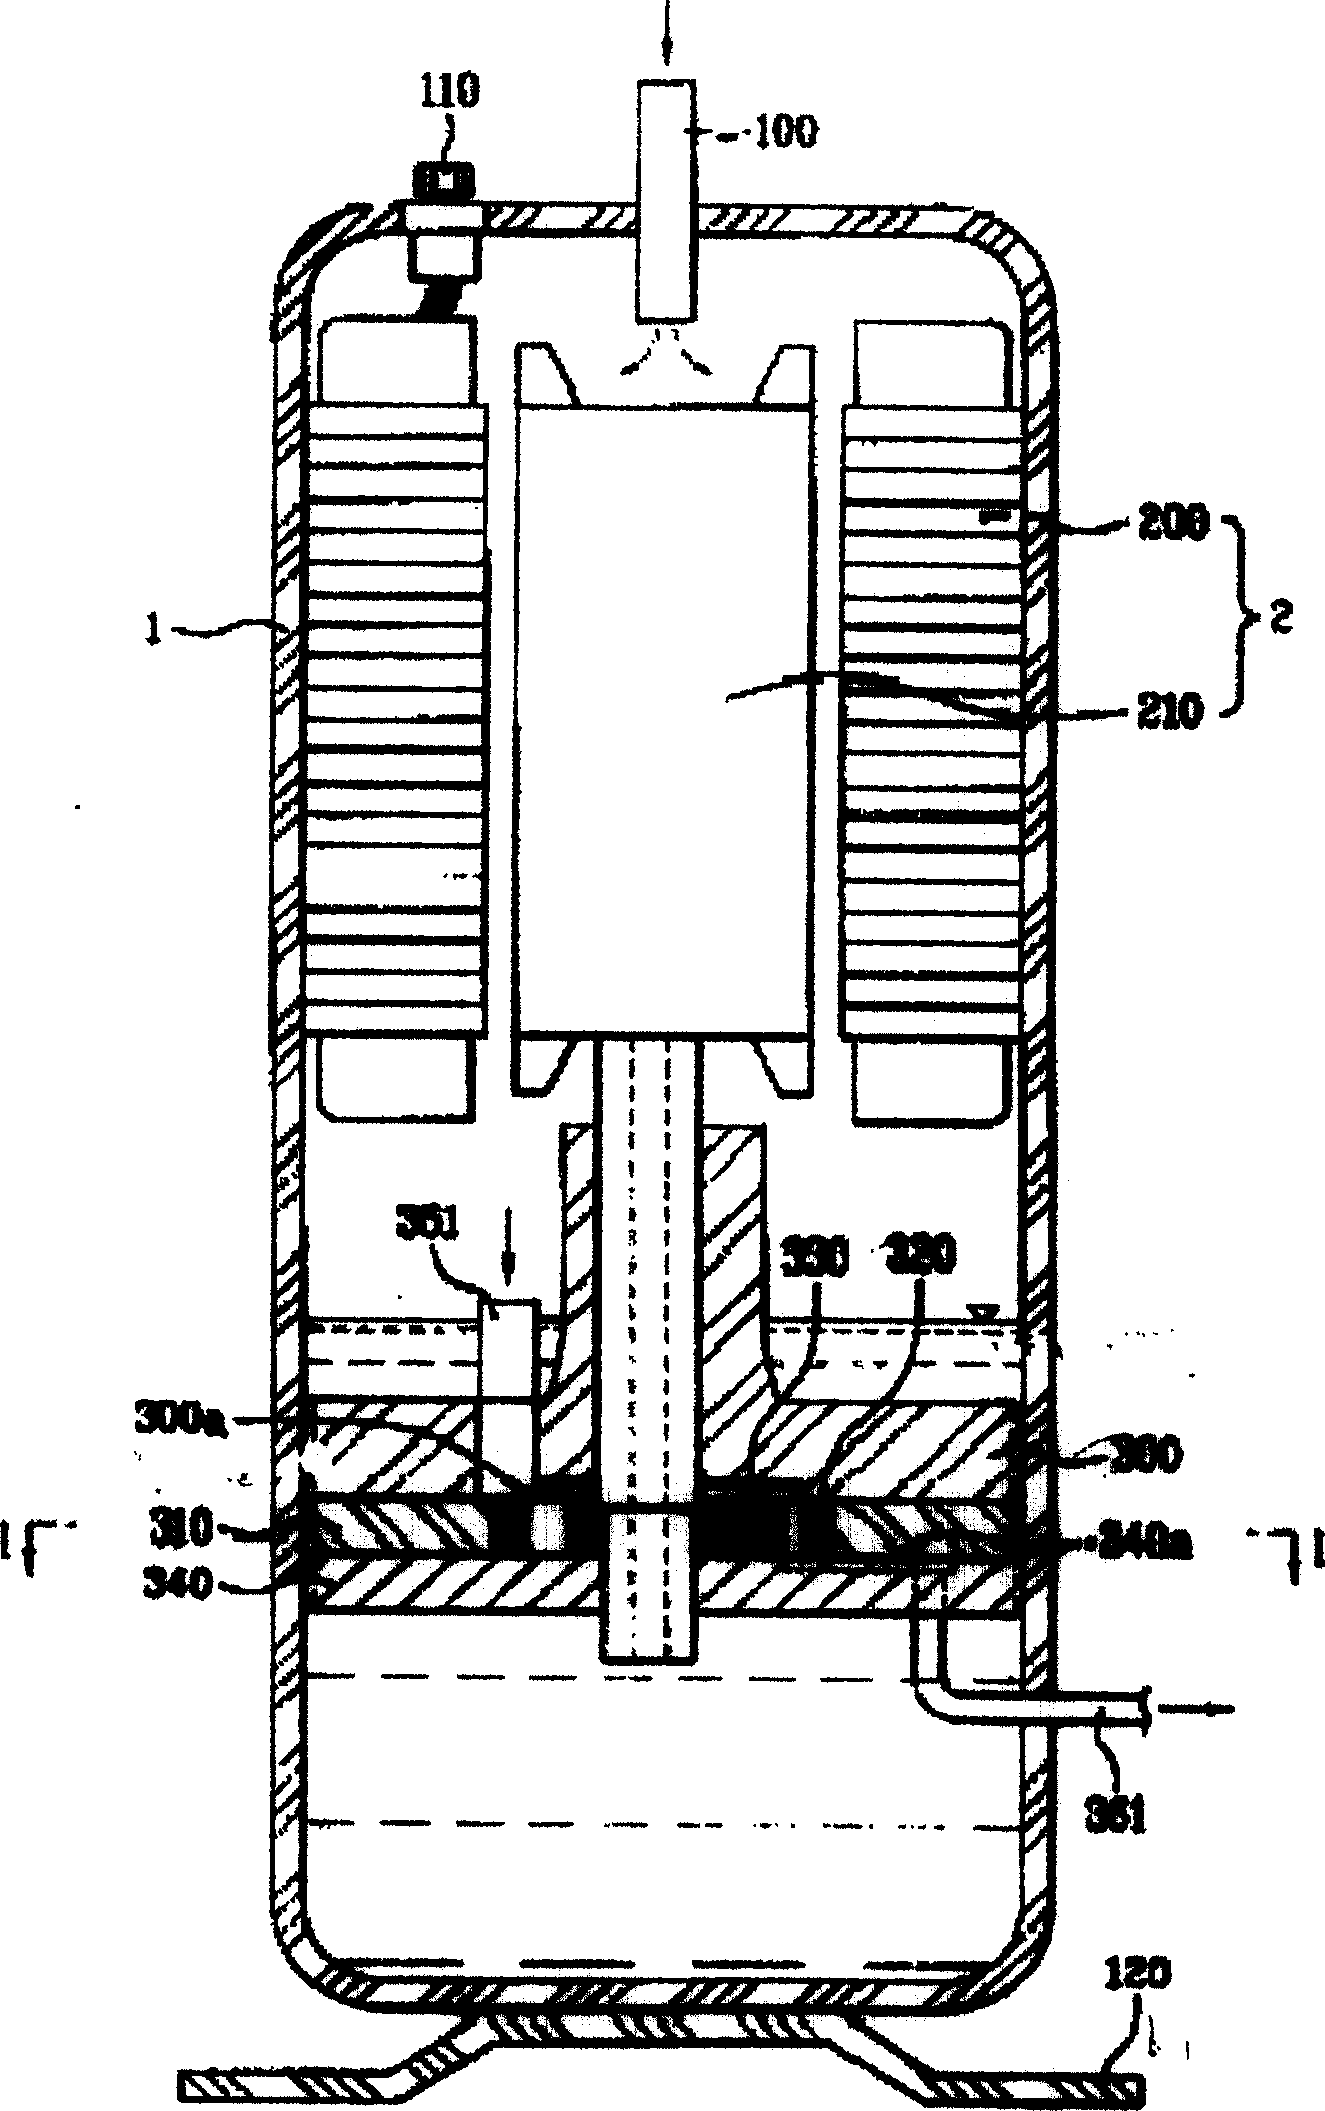 A gear type compressor